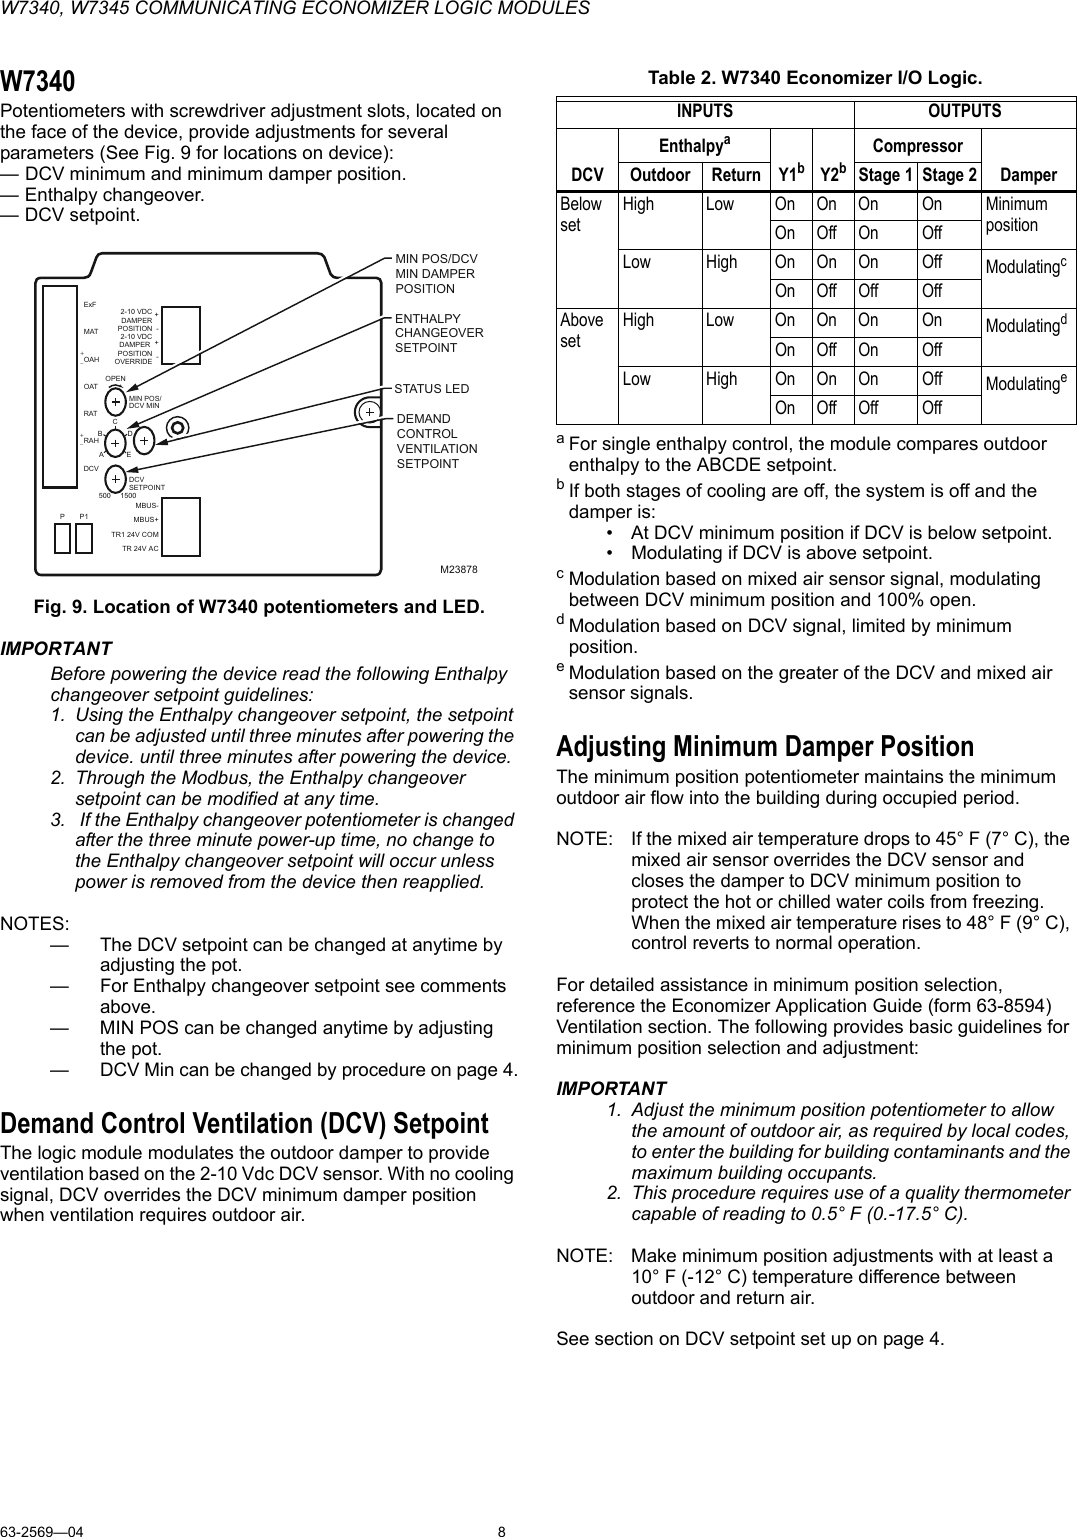 Page 8 of 12 - Honeywell Honeywell-W7340-Users-Manual- 63-2569-4 - W7340, W7345 Communicating Economizer Logic Modules  Honeywell-w7340-users-manual